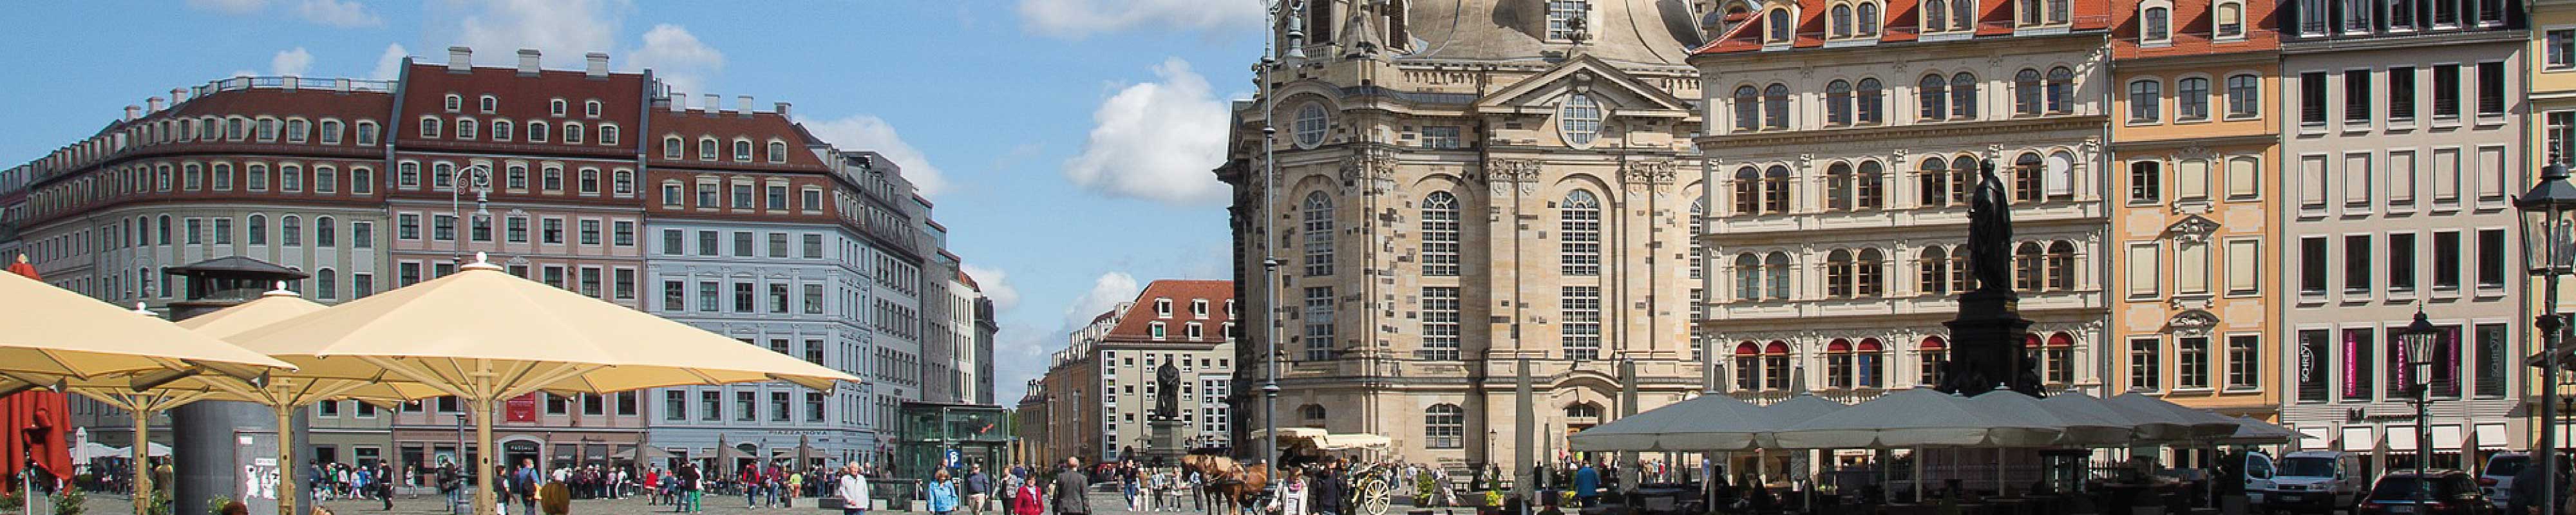 Gepäckaufbewahrung | Dresden - Nannybag